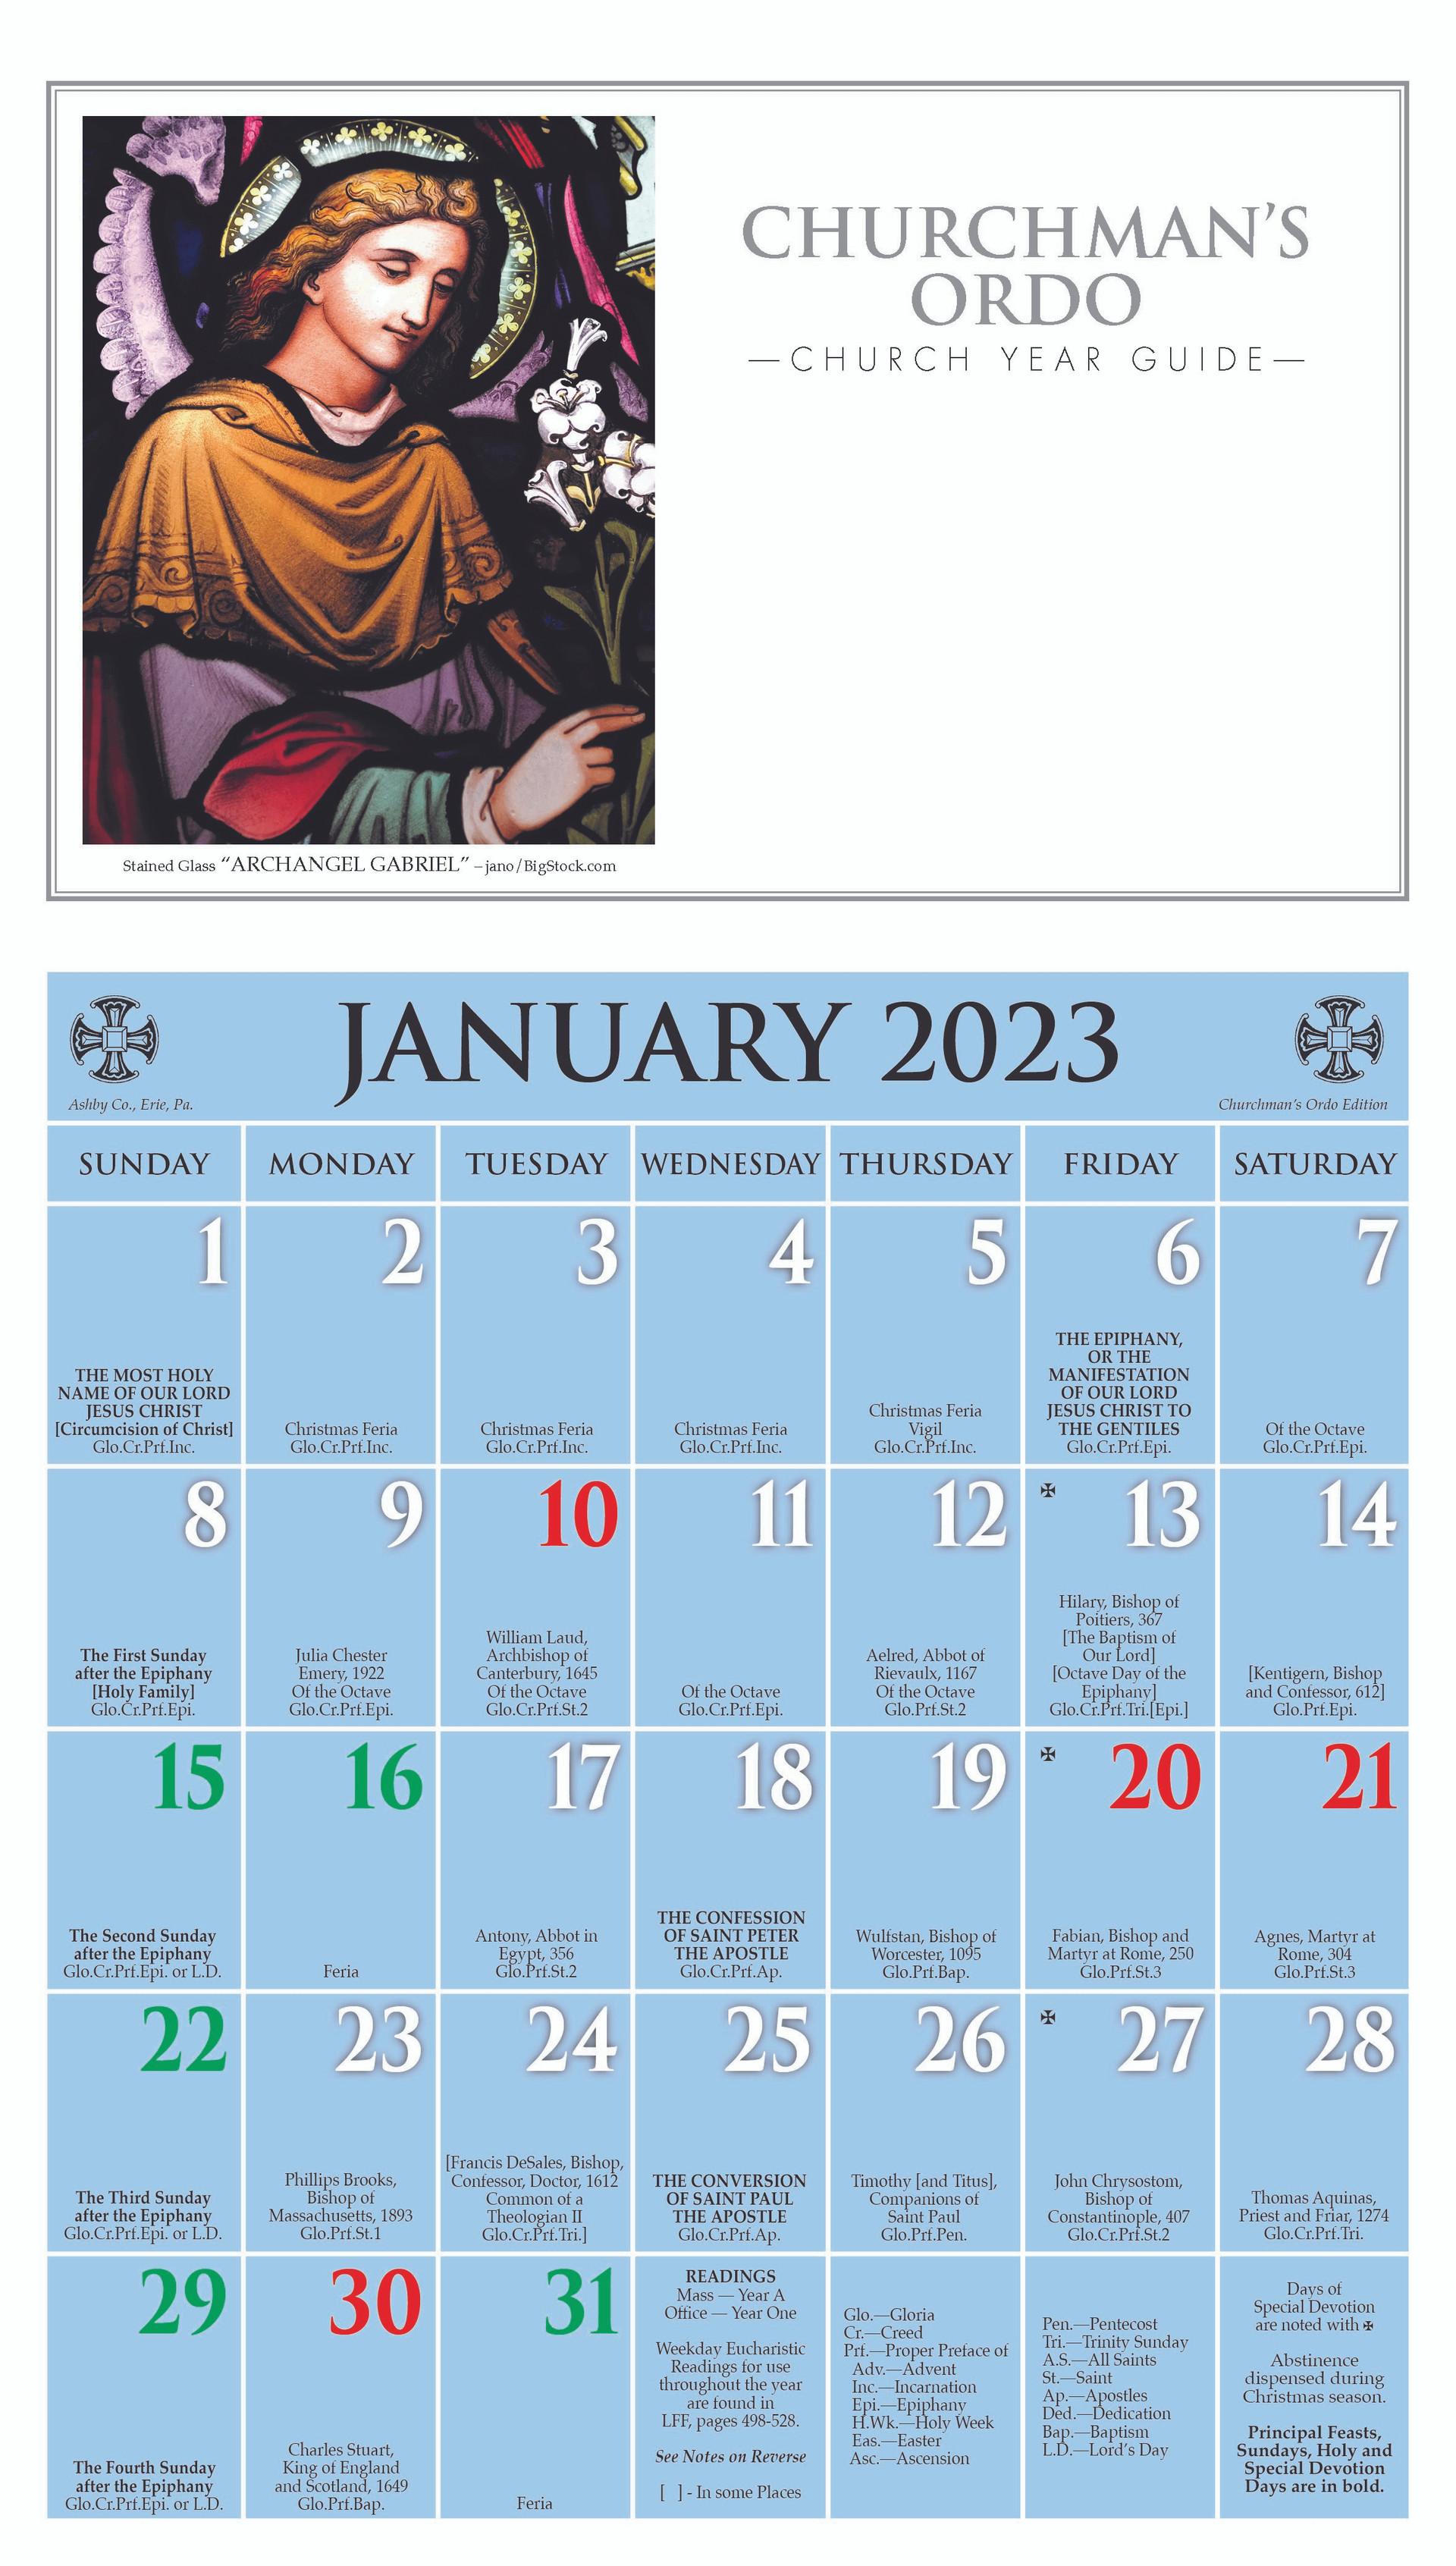 episcopal-church-year-guide-kalendar-calendar-2023-episcopal-shoppe